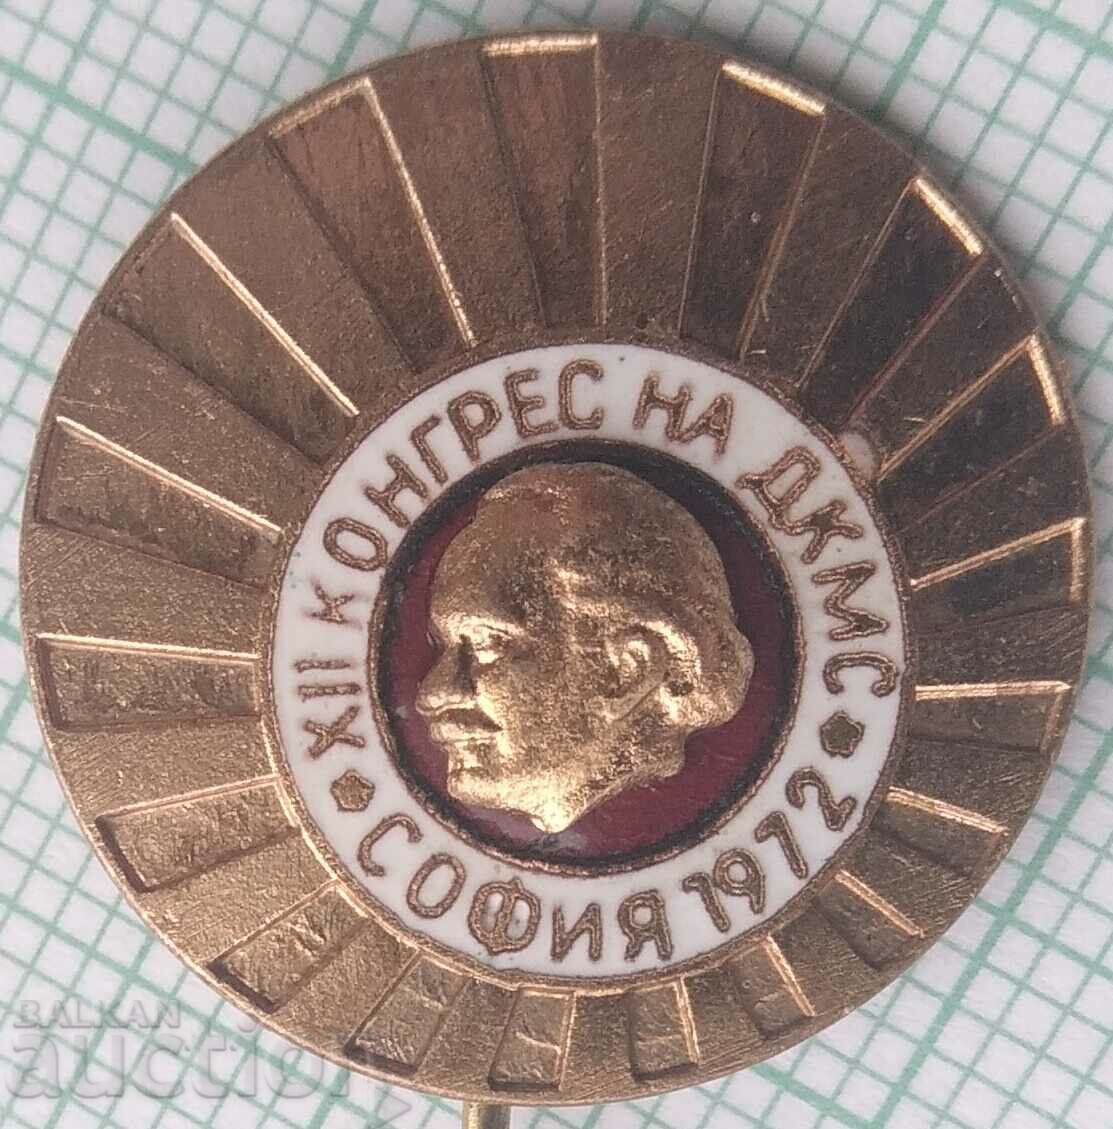 15006 Badge - 12th congress of DKMS Sofia 1972 - bronze enamel